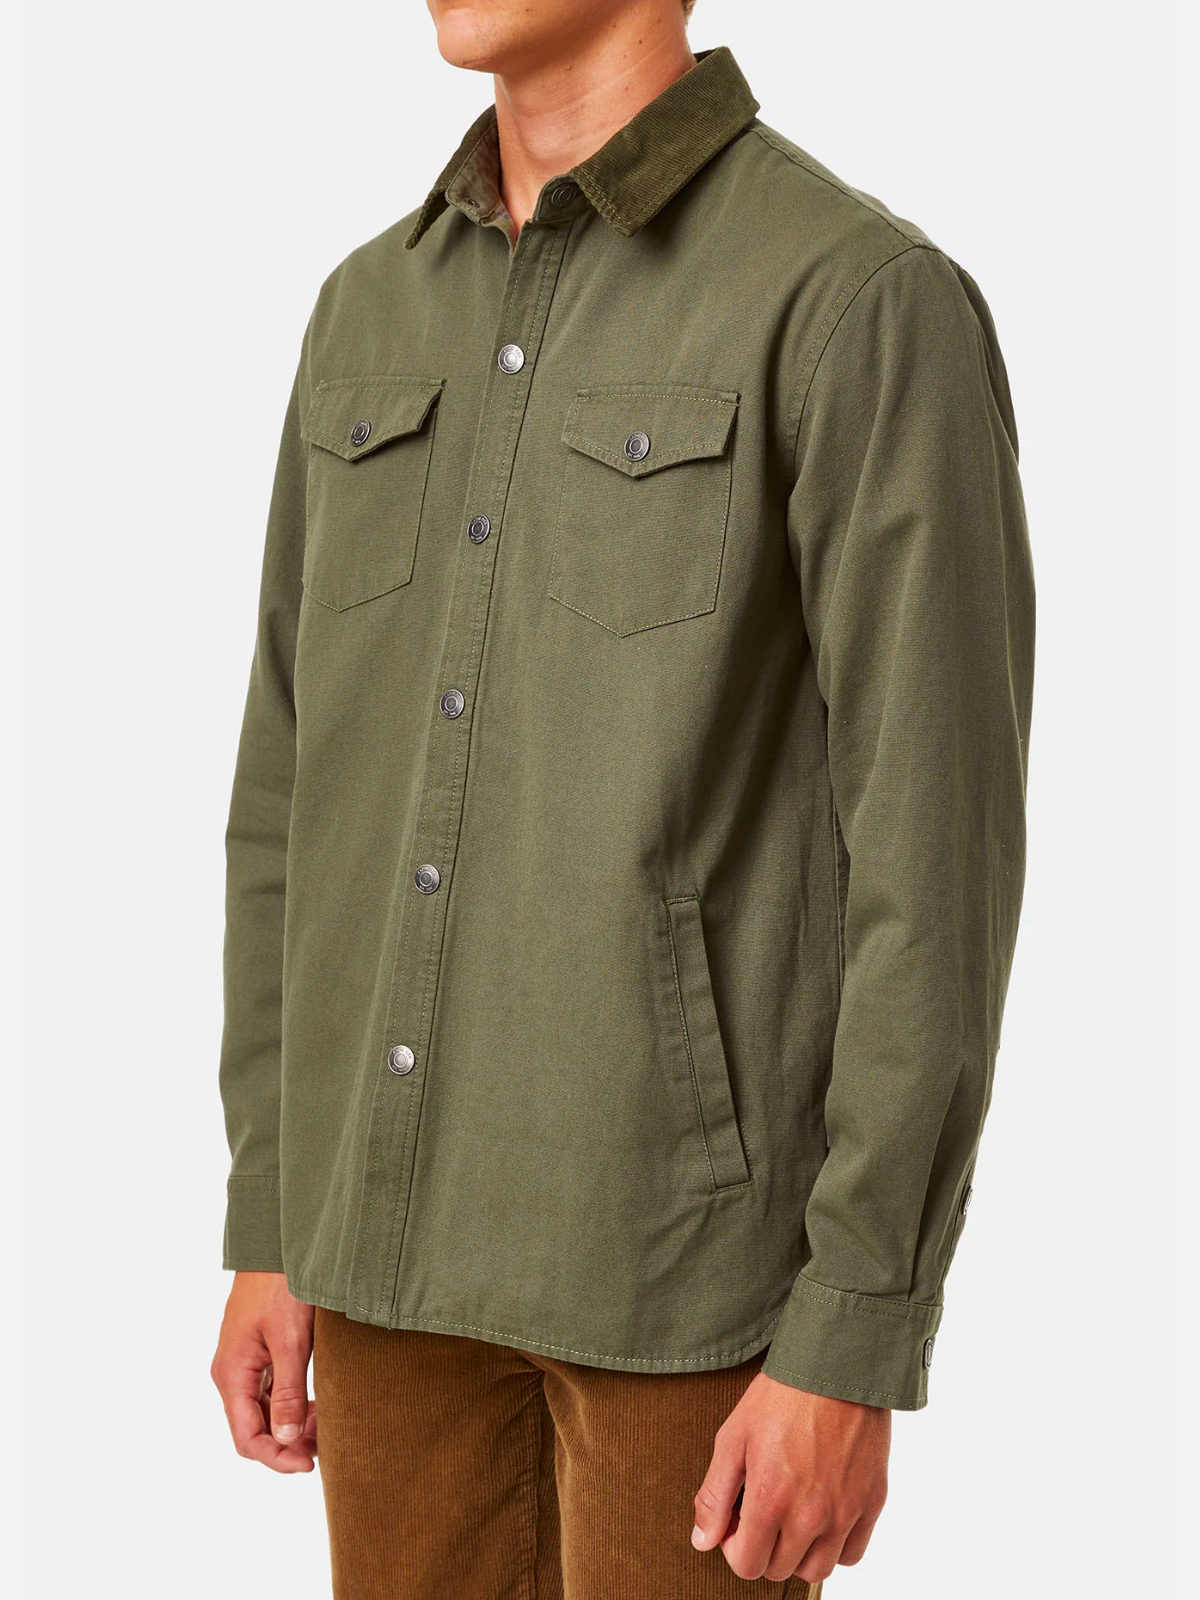 katin campbell jacket olive green cotton cavas corduroy collar kempt athens ga georgia men's clothing store